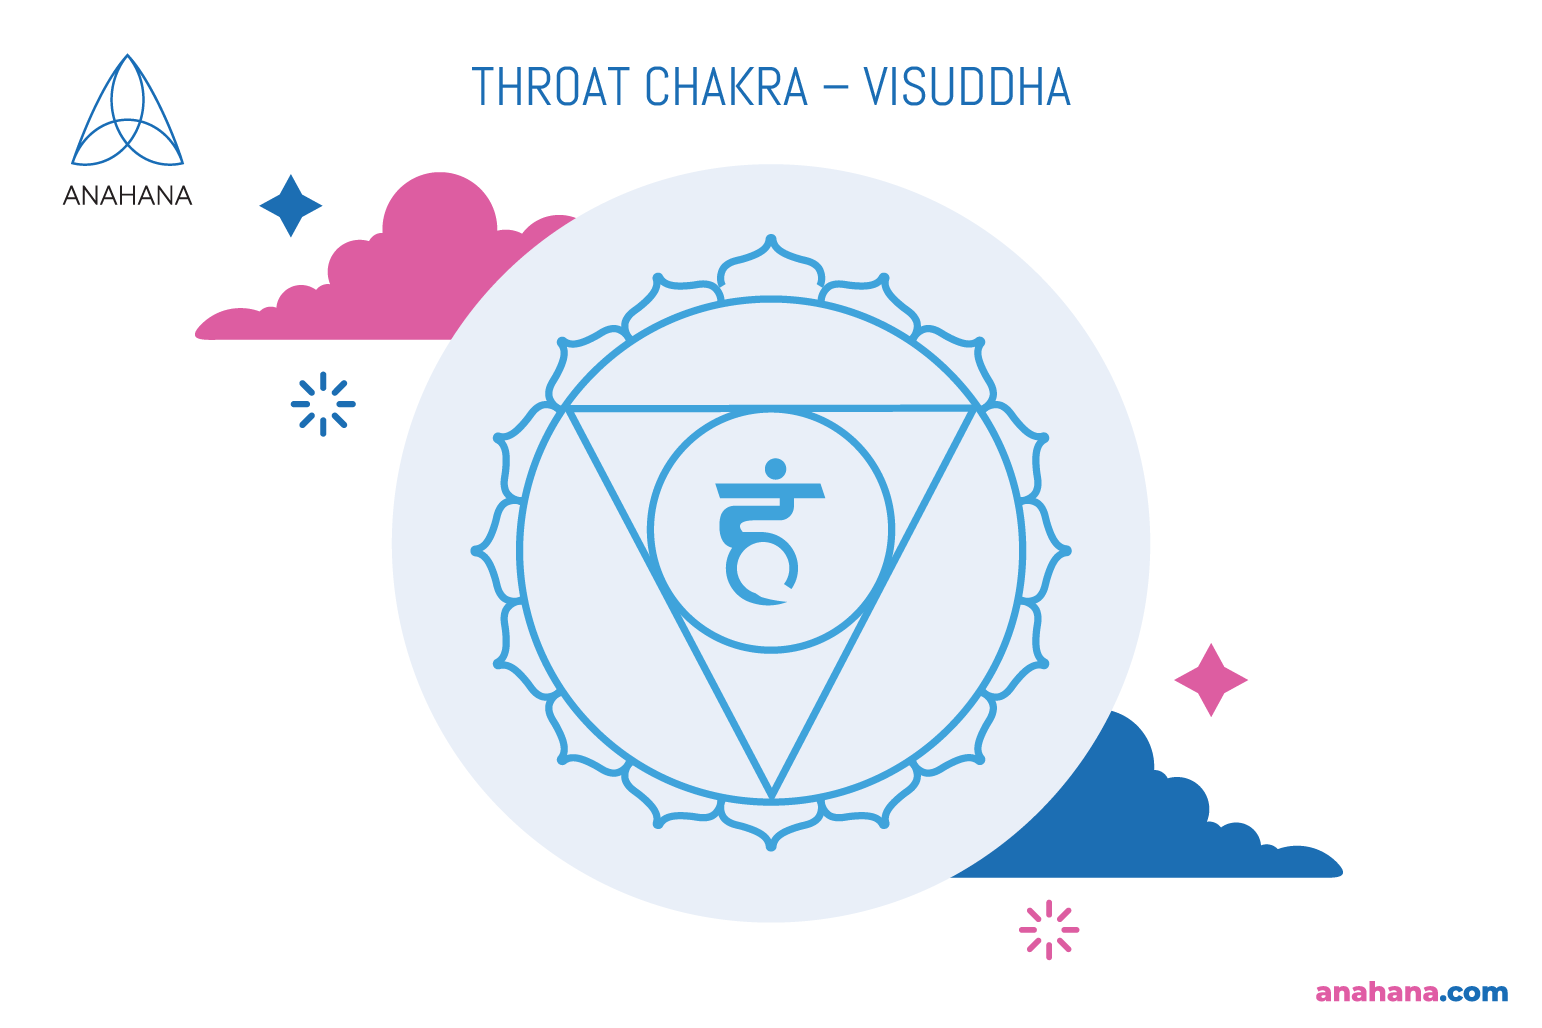 Símbolo del chakra de la garganta (visuddha)